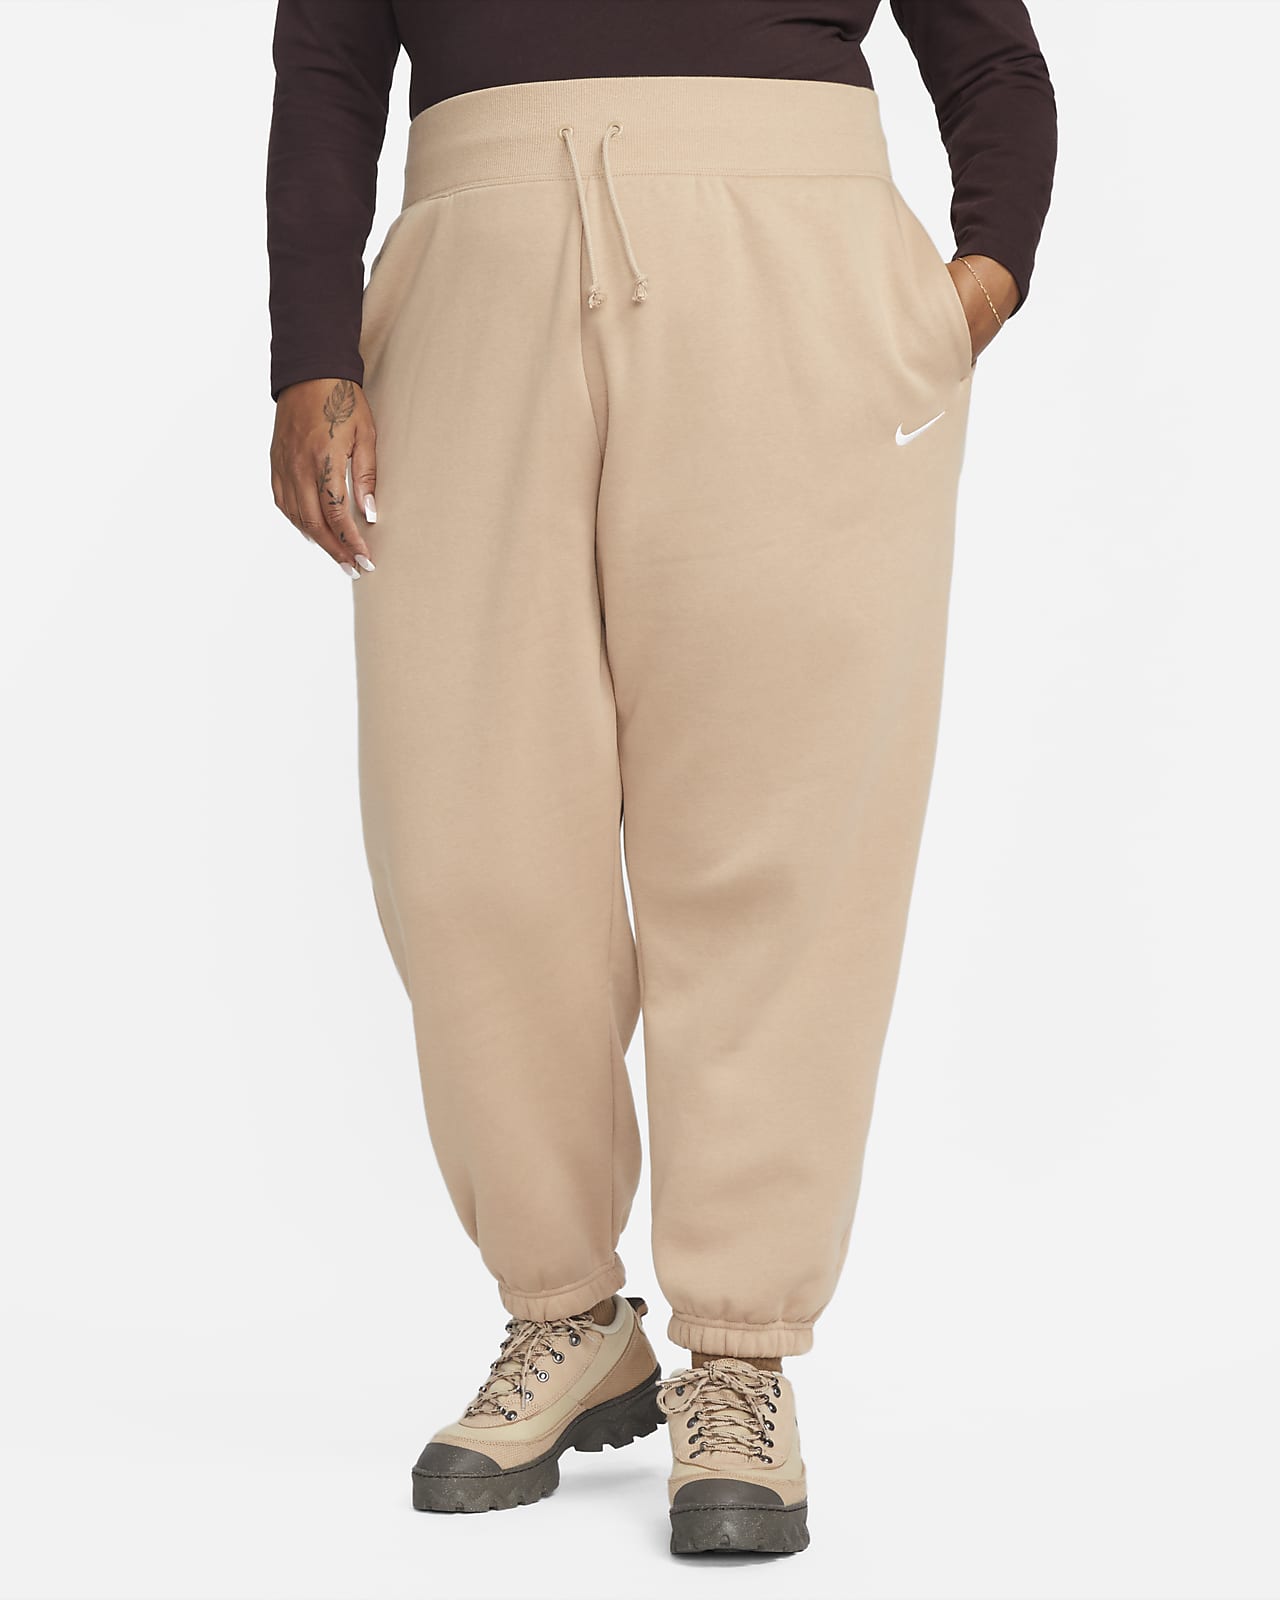 Nike Sportswear Phoenix Fleece Oversized joggingbroek met hoge taille voor dames (Plus Size)